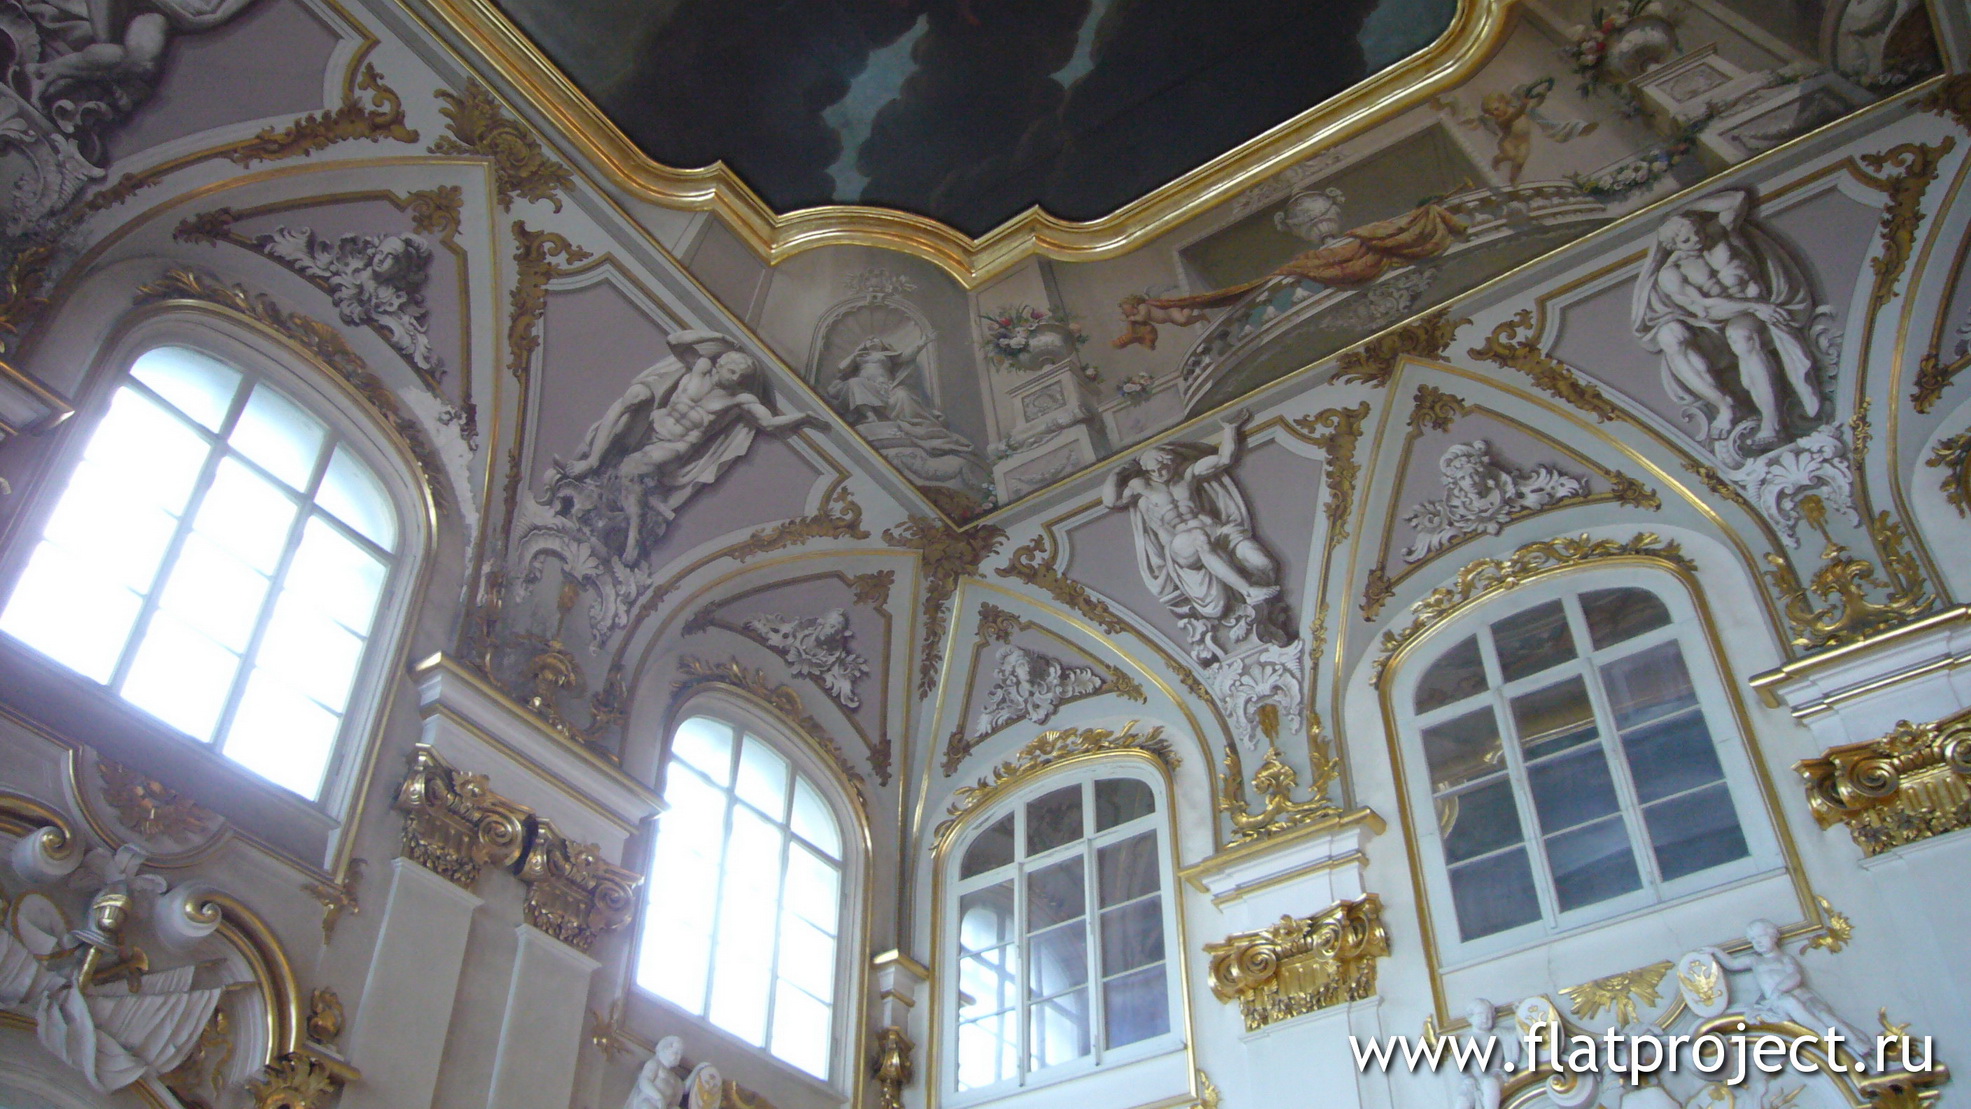 The State Hermitage museum interiors – photo 98